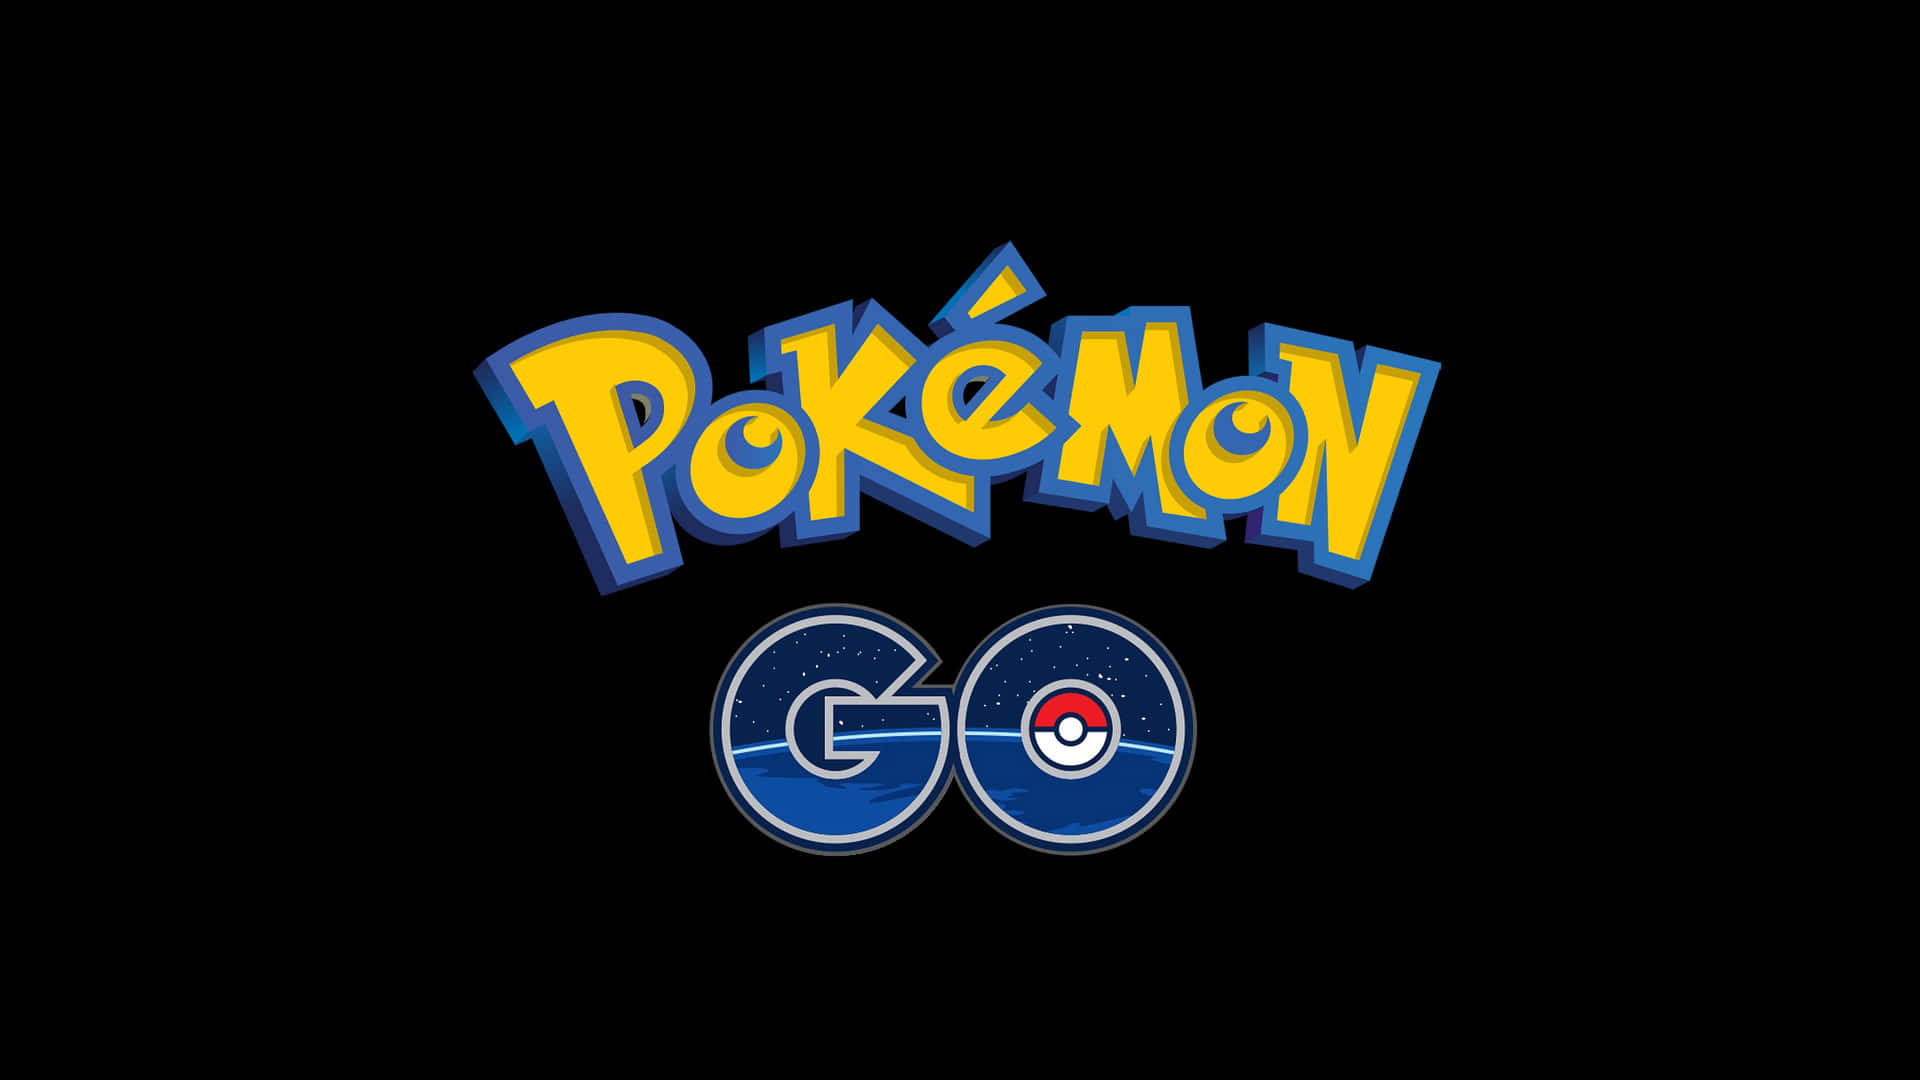 Pokemon Go Logo On A Black Background